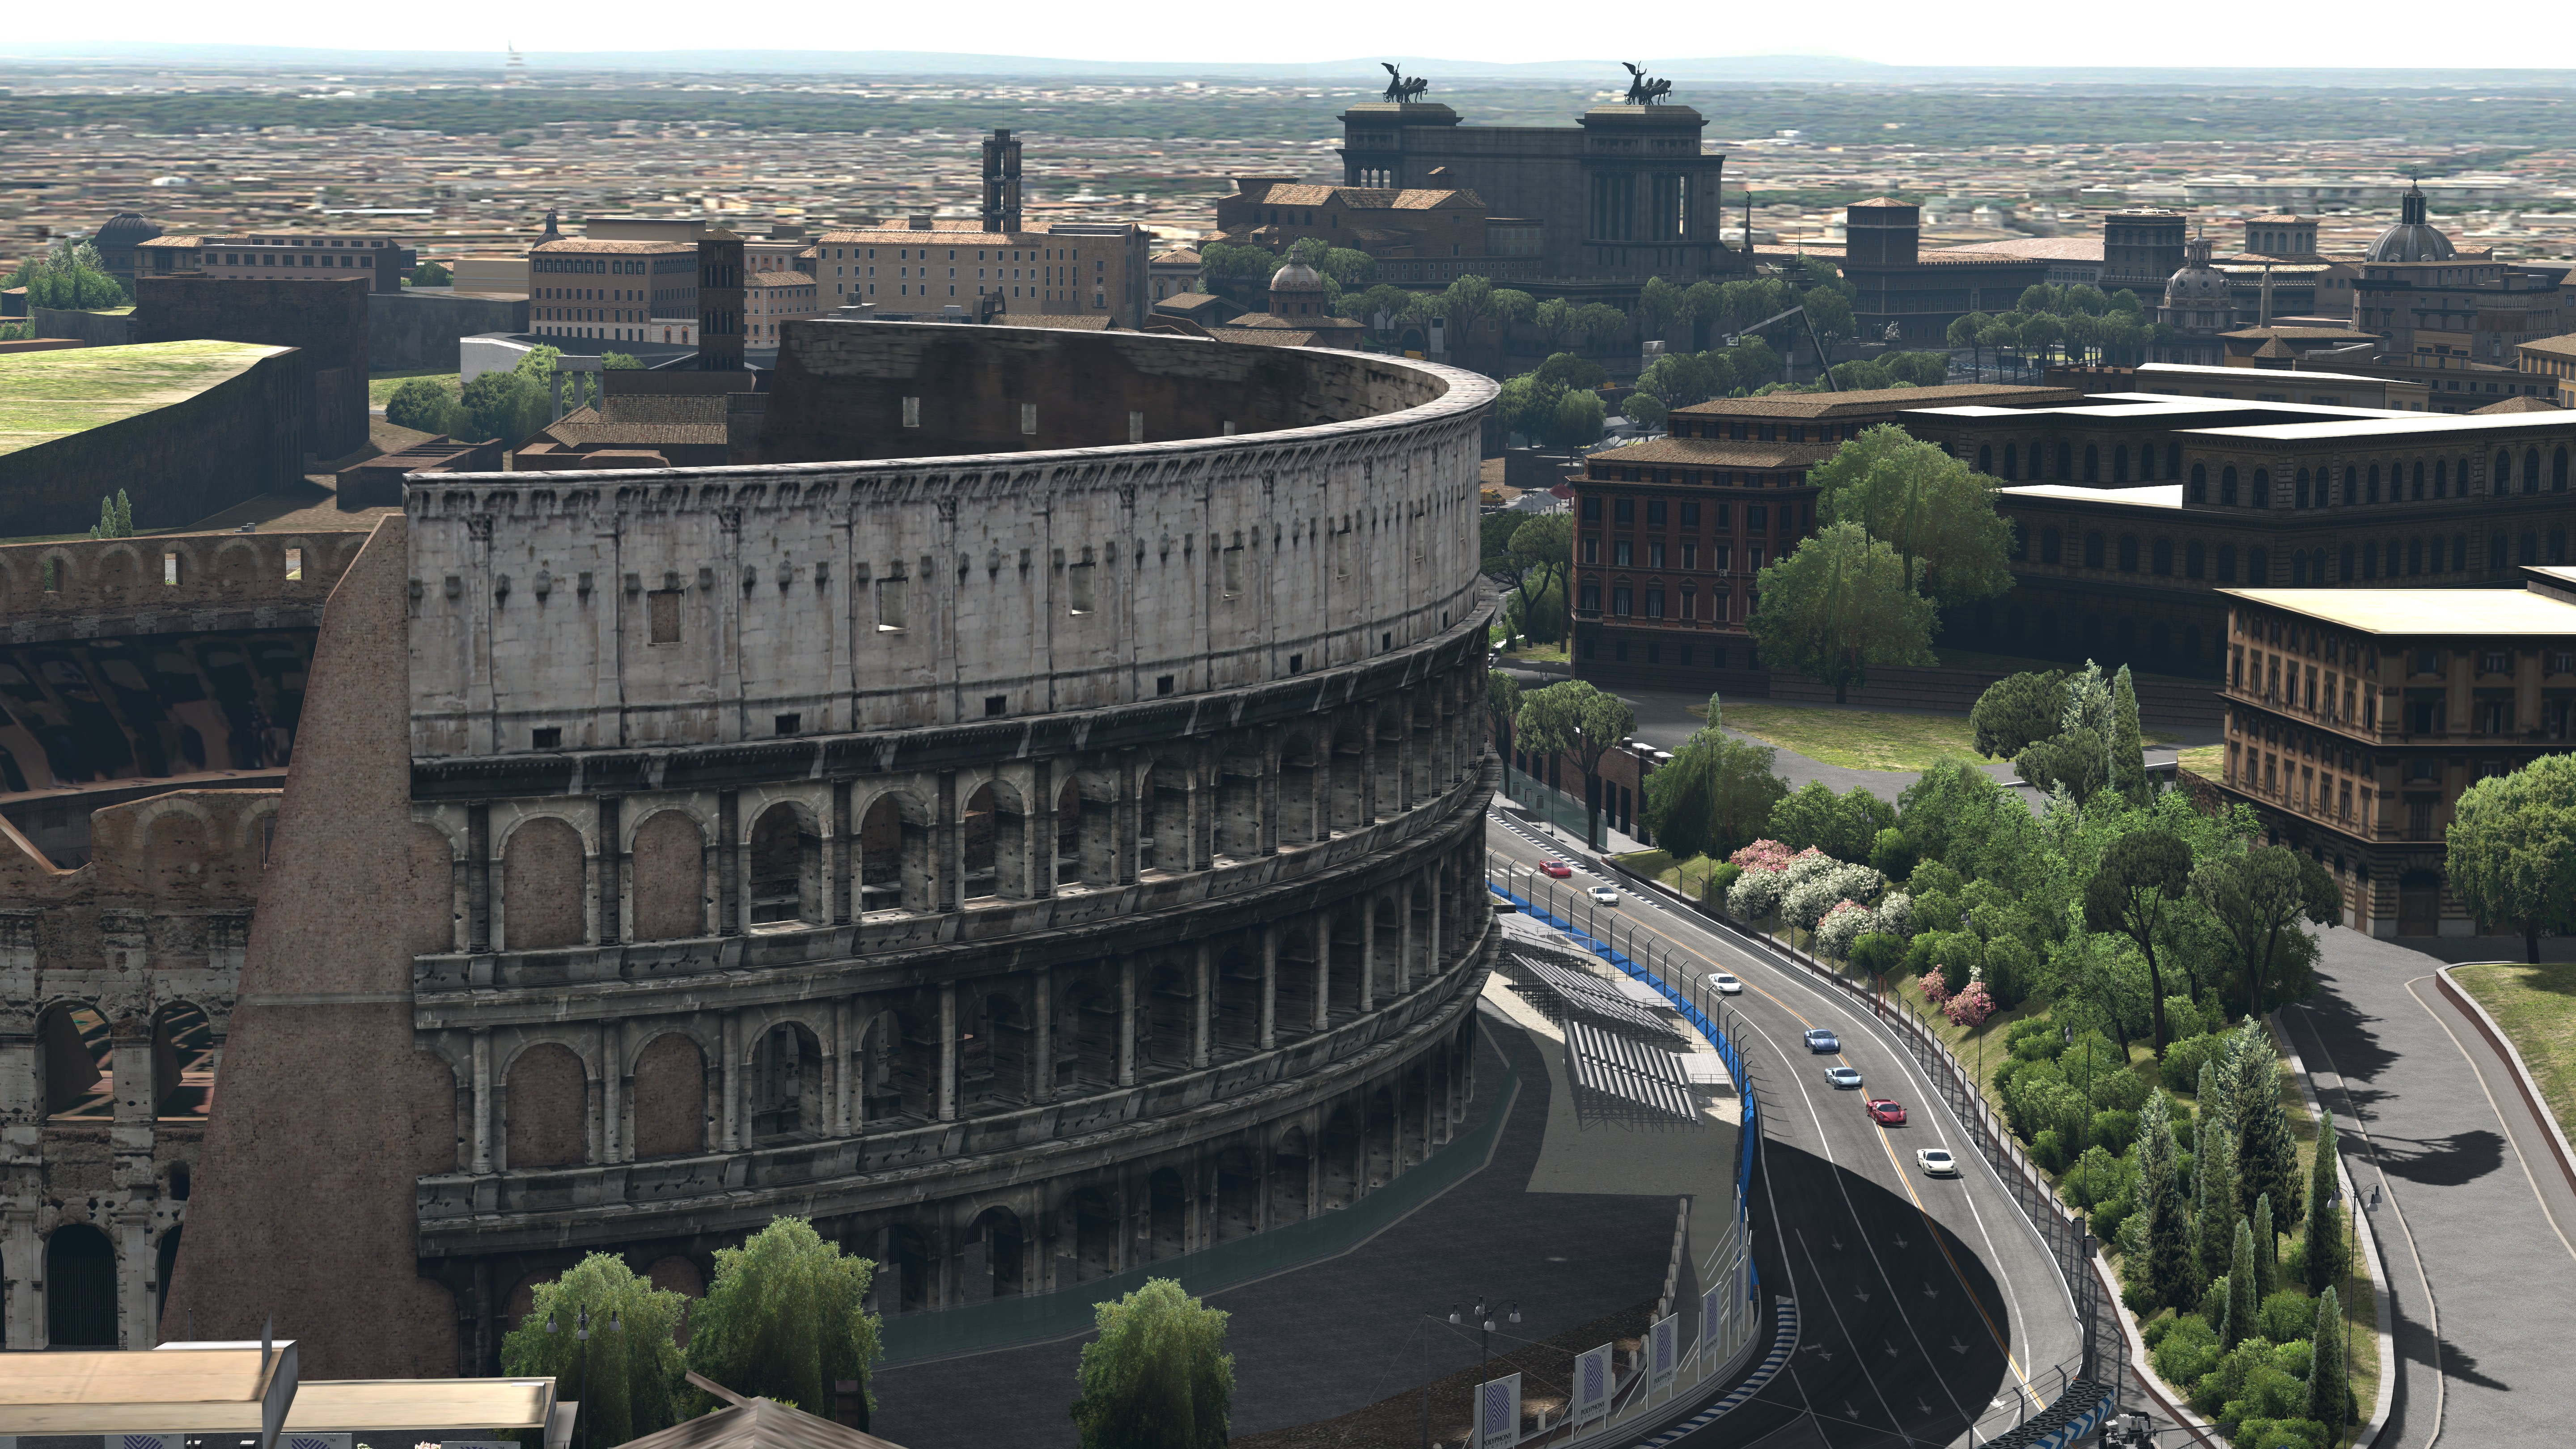 General 5760x3240 Rome Italy cityscape digital art Colliseum ancient ruins